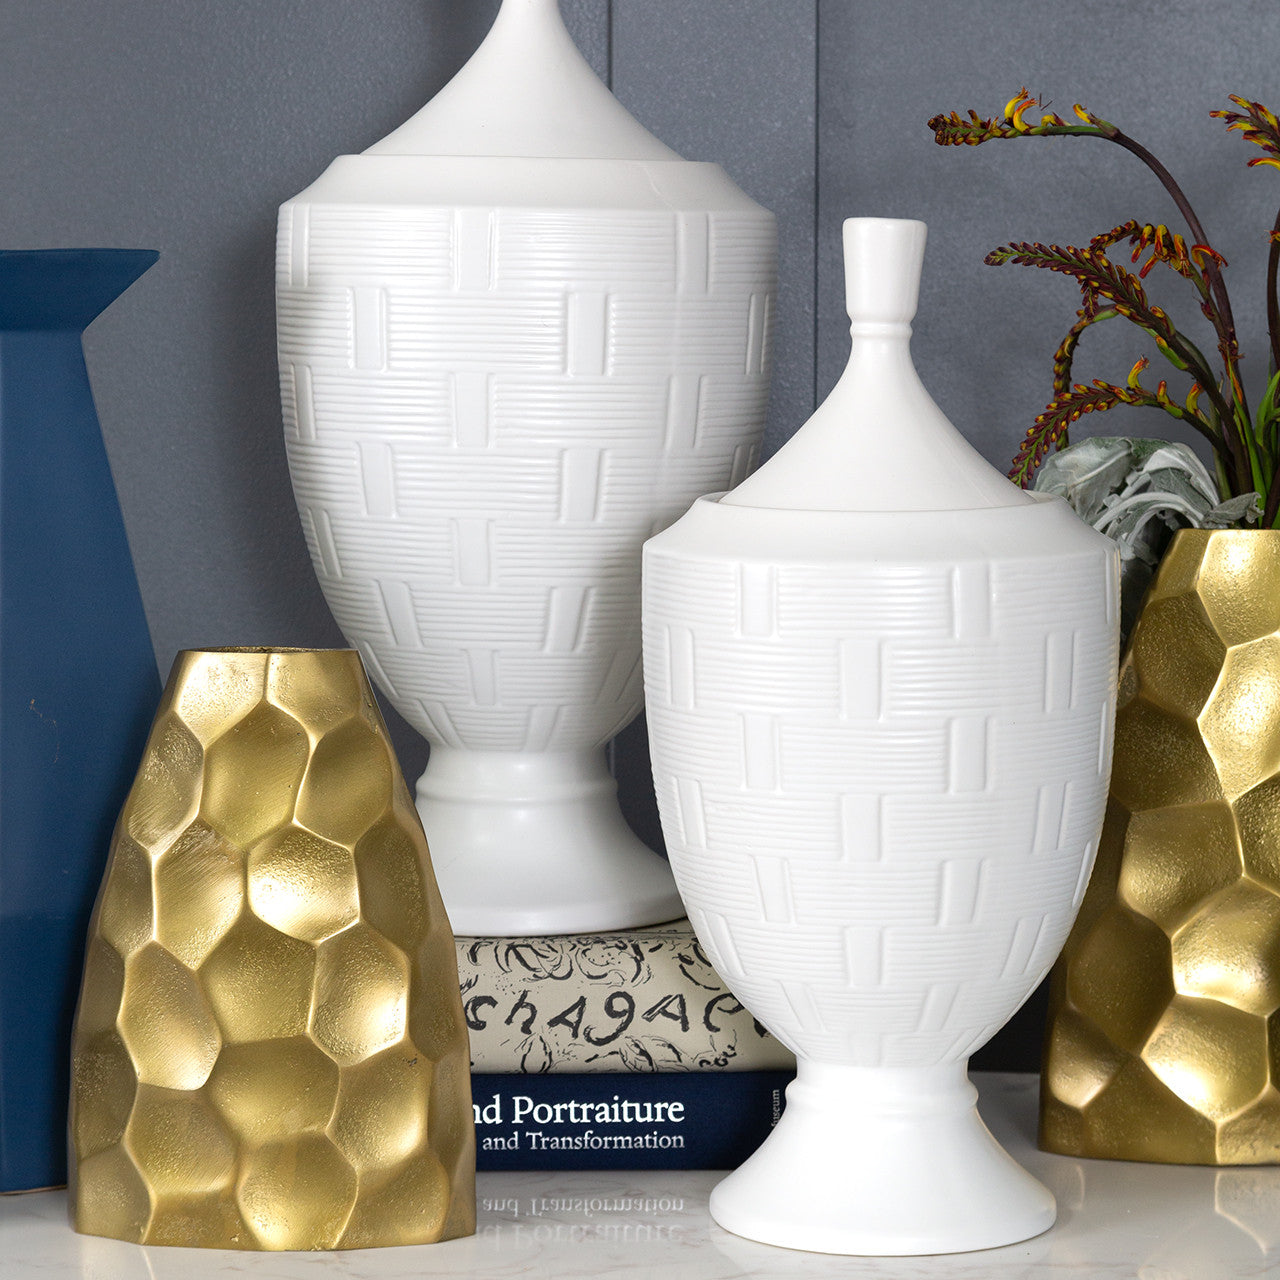 Scalloped Gold Vase (Various Sizes)